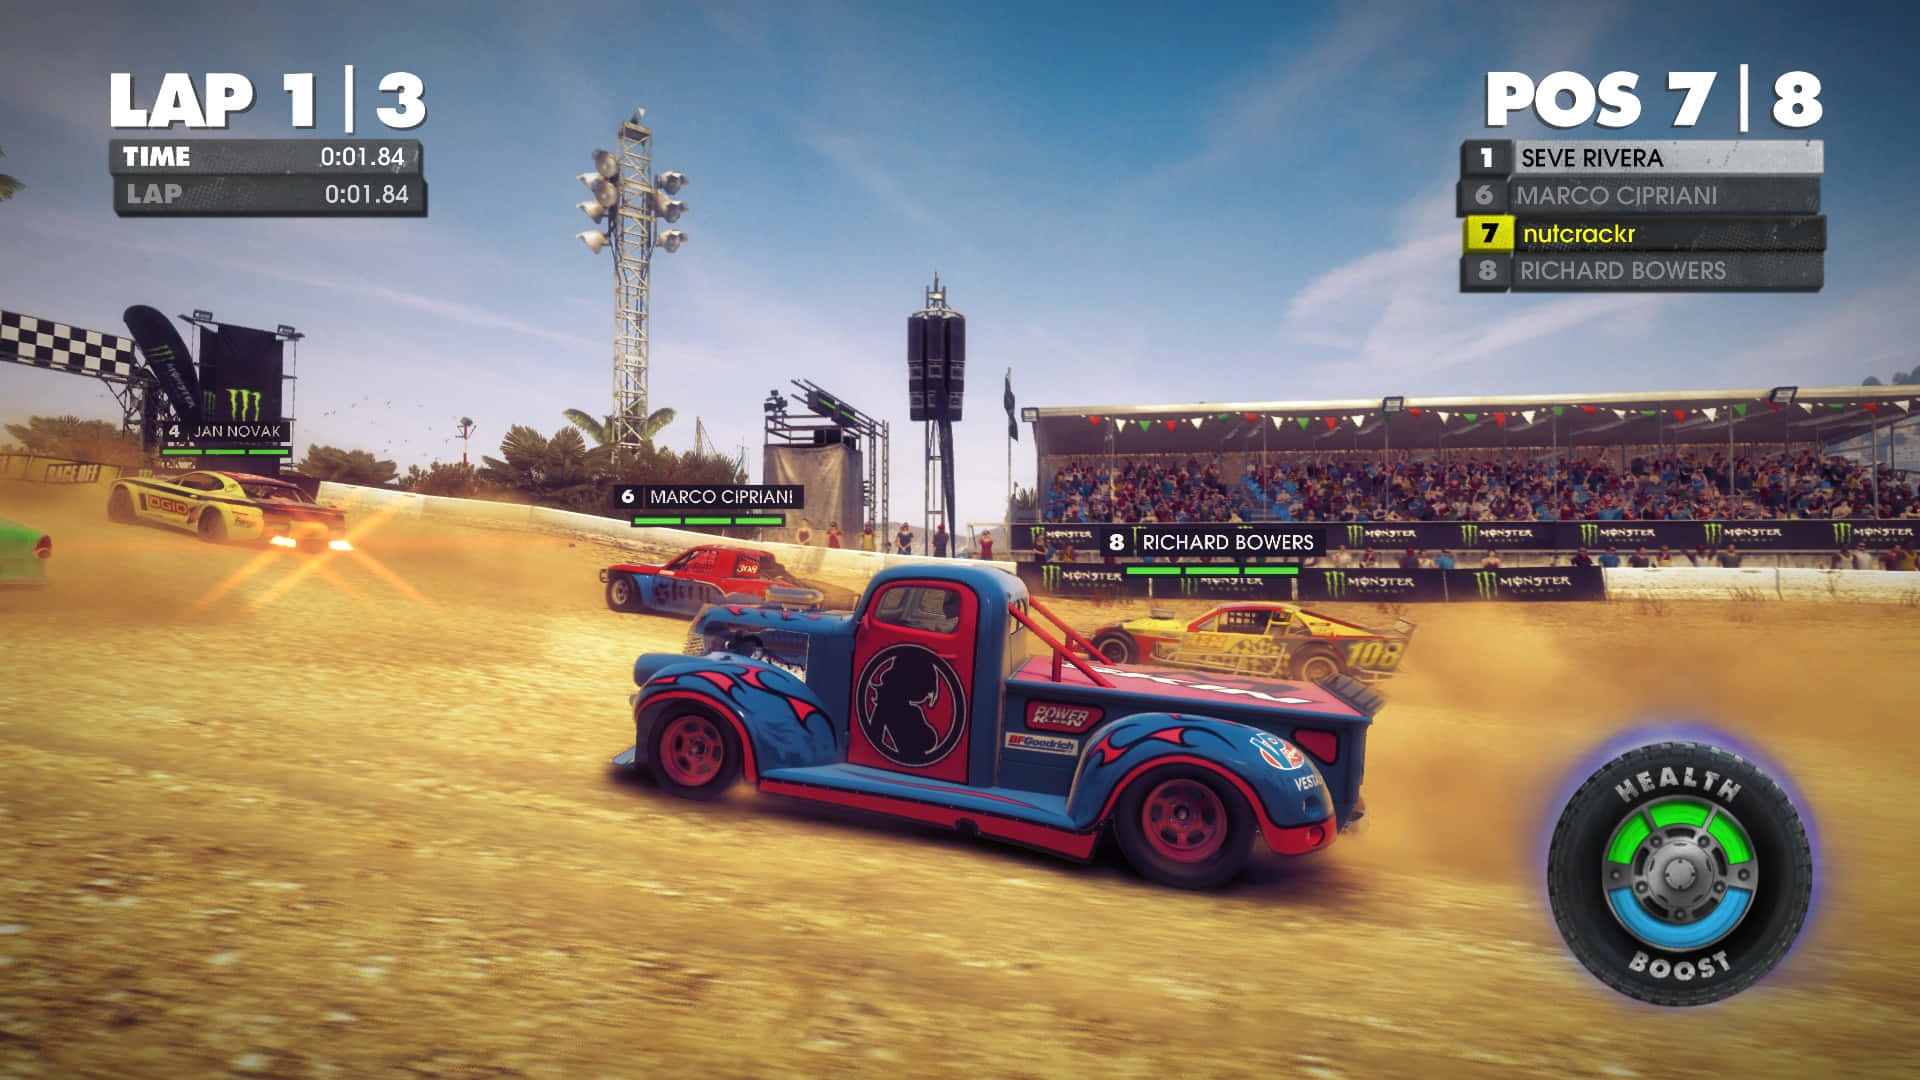 Føl rush og adrenalinen, når du kører igennem smalle passagerer i HD Dirt Showdown.